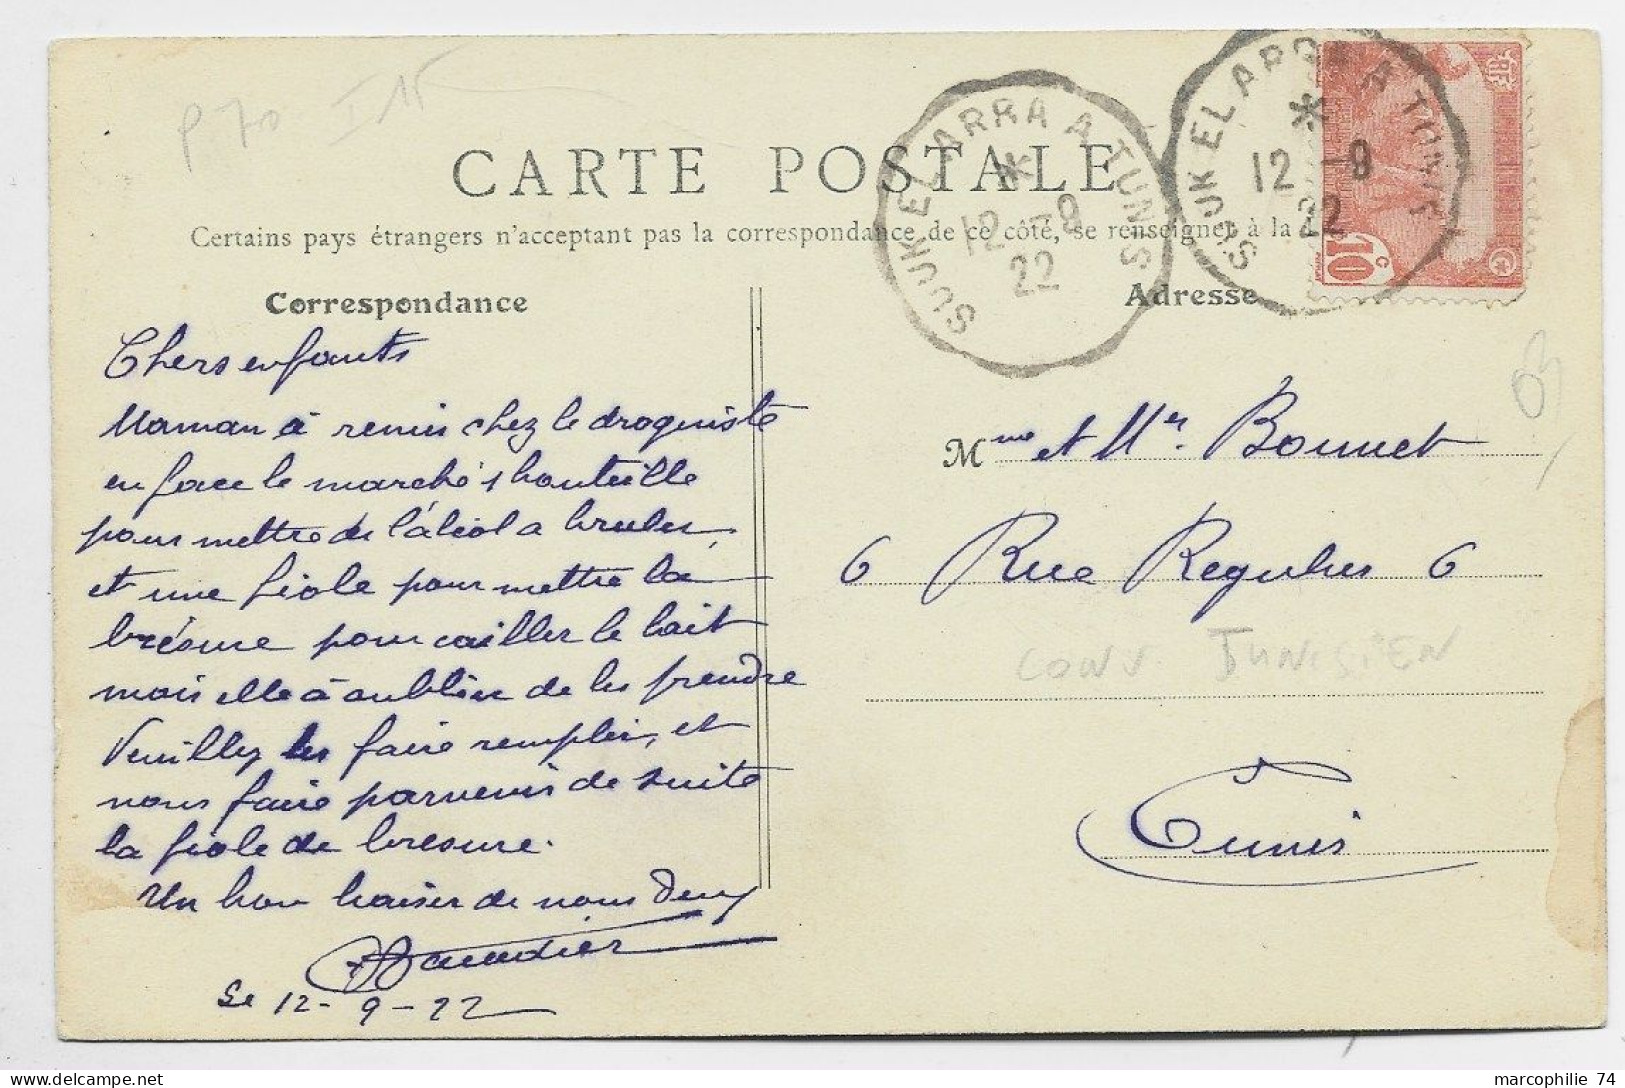 TUNISIE 10C CARTE VICHY ALLIER CONVOYEUR SOUK EL ARRA A TUNIS 12.9.1922 COTE 160€ RARE - Bahnpost